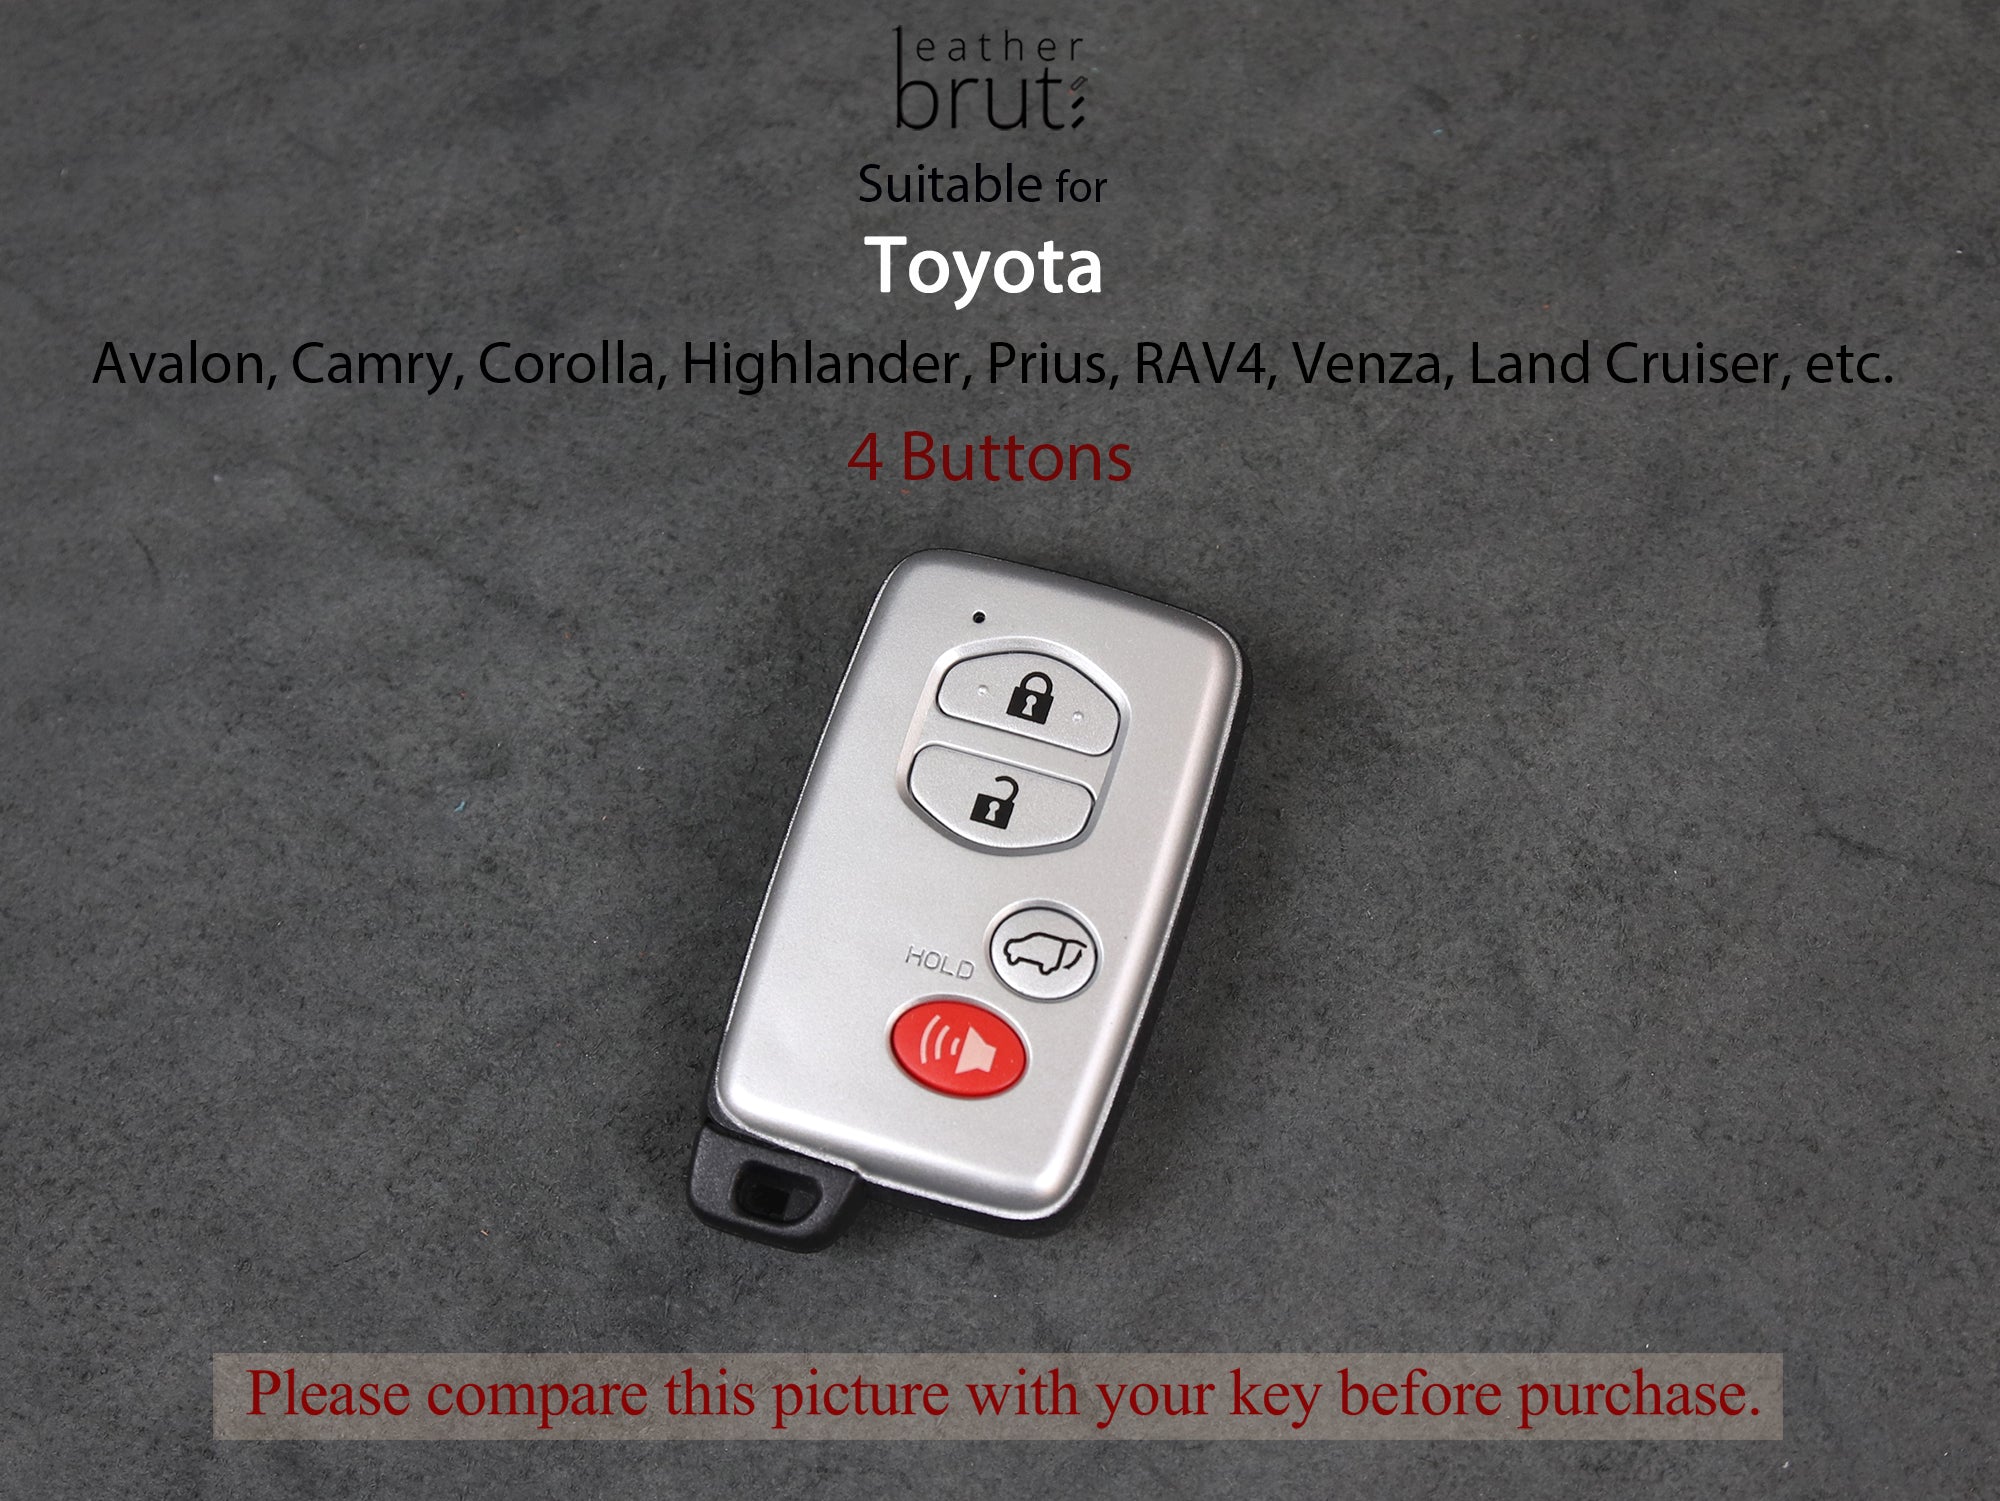 Toyota leather key case - Camry, Highlander, Avalon - Leather Brut